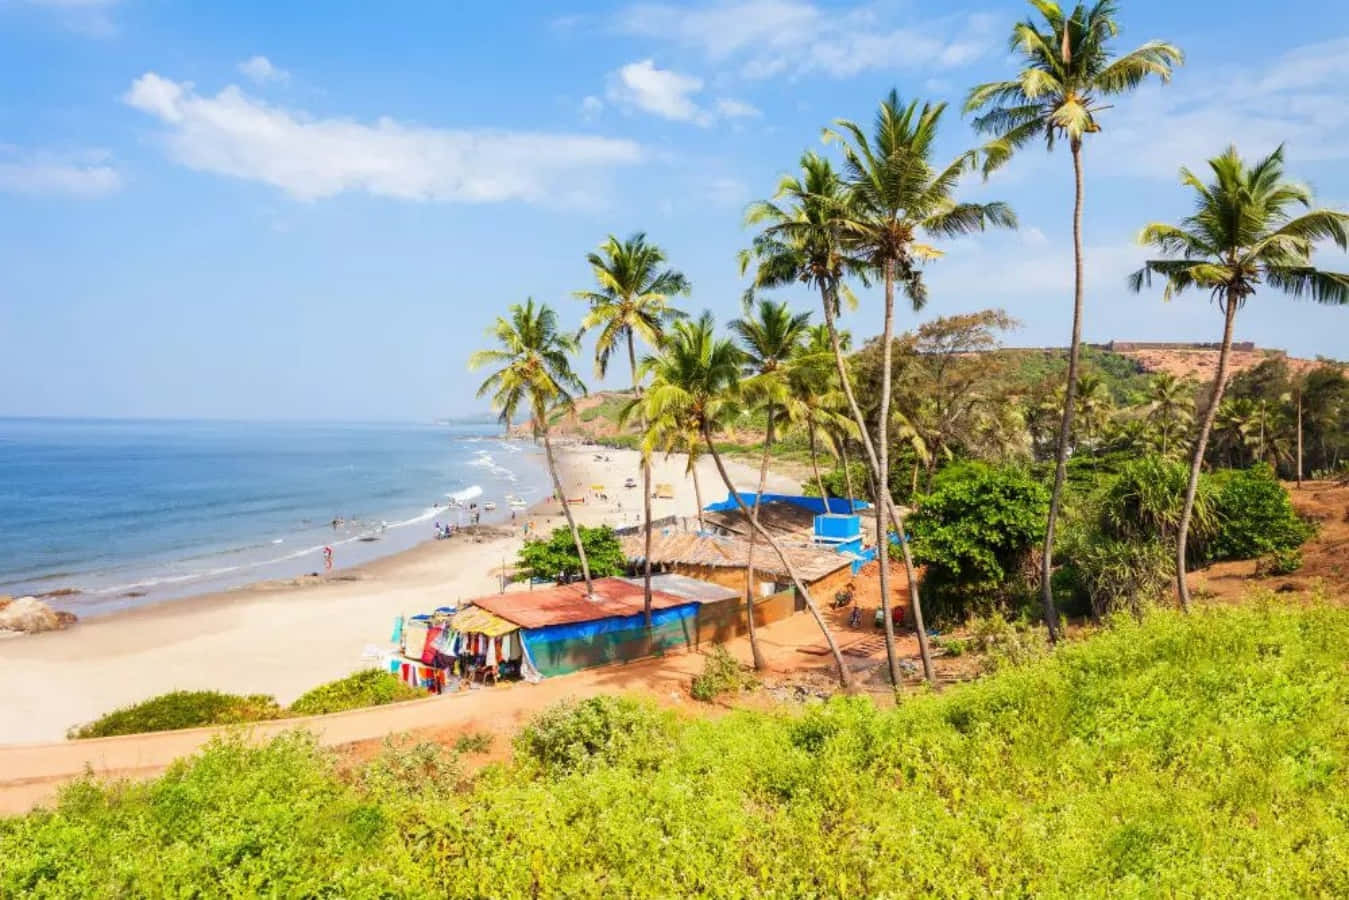 Kopplaav I Paradiset Vid Goa-stranden